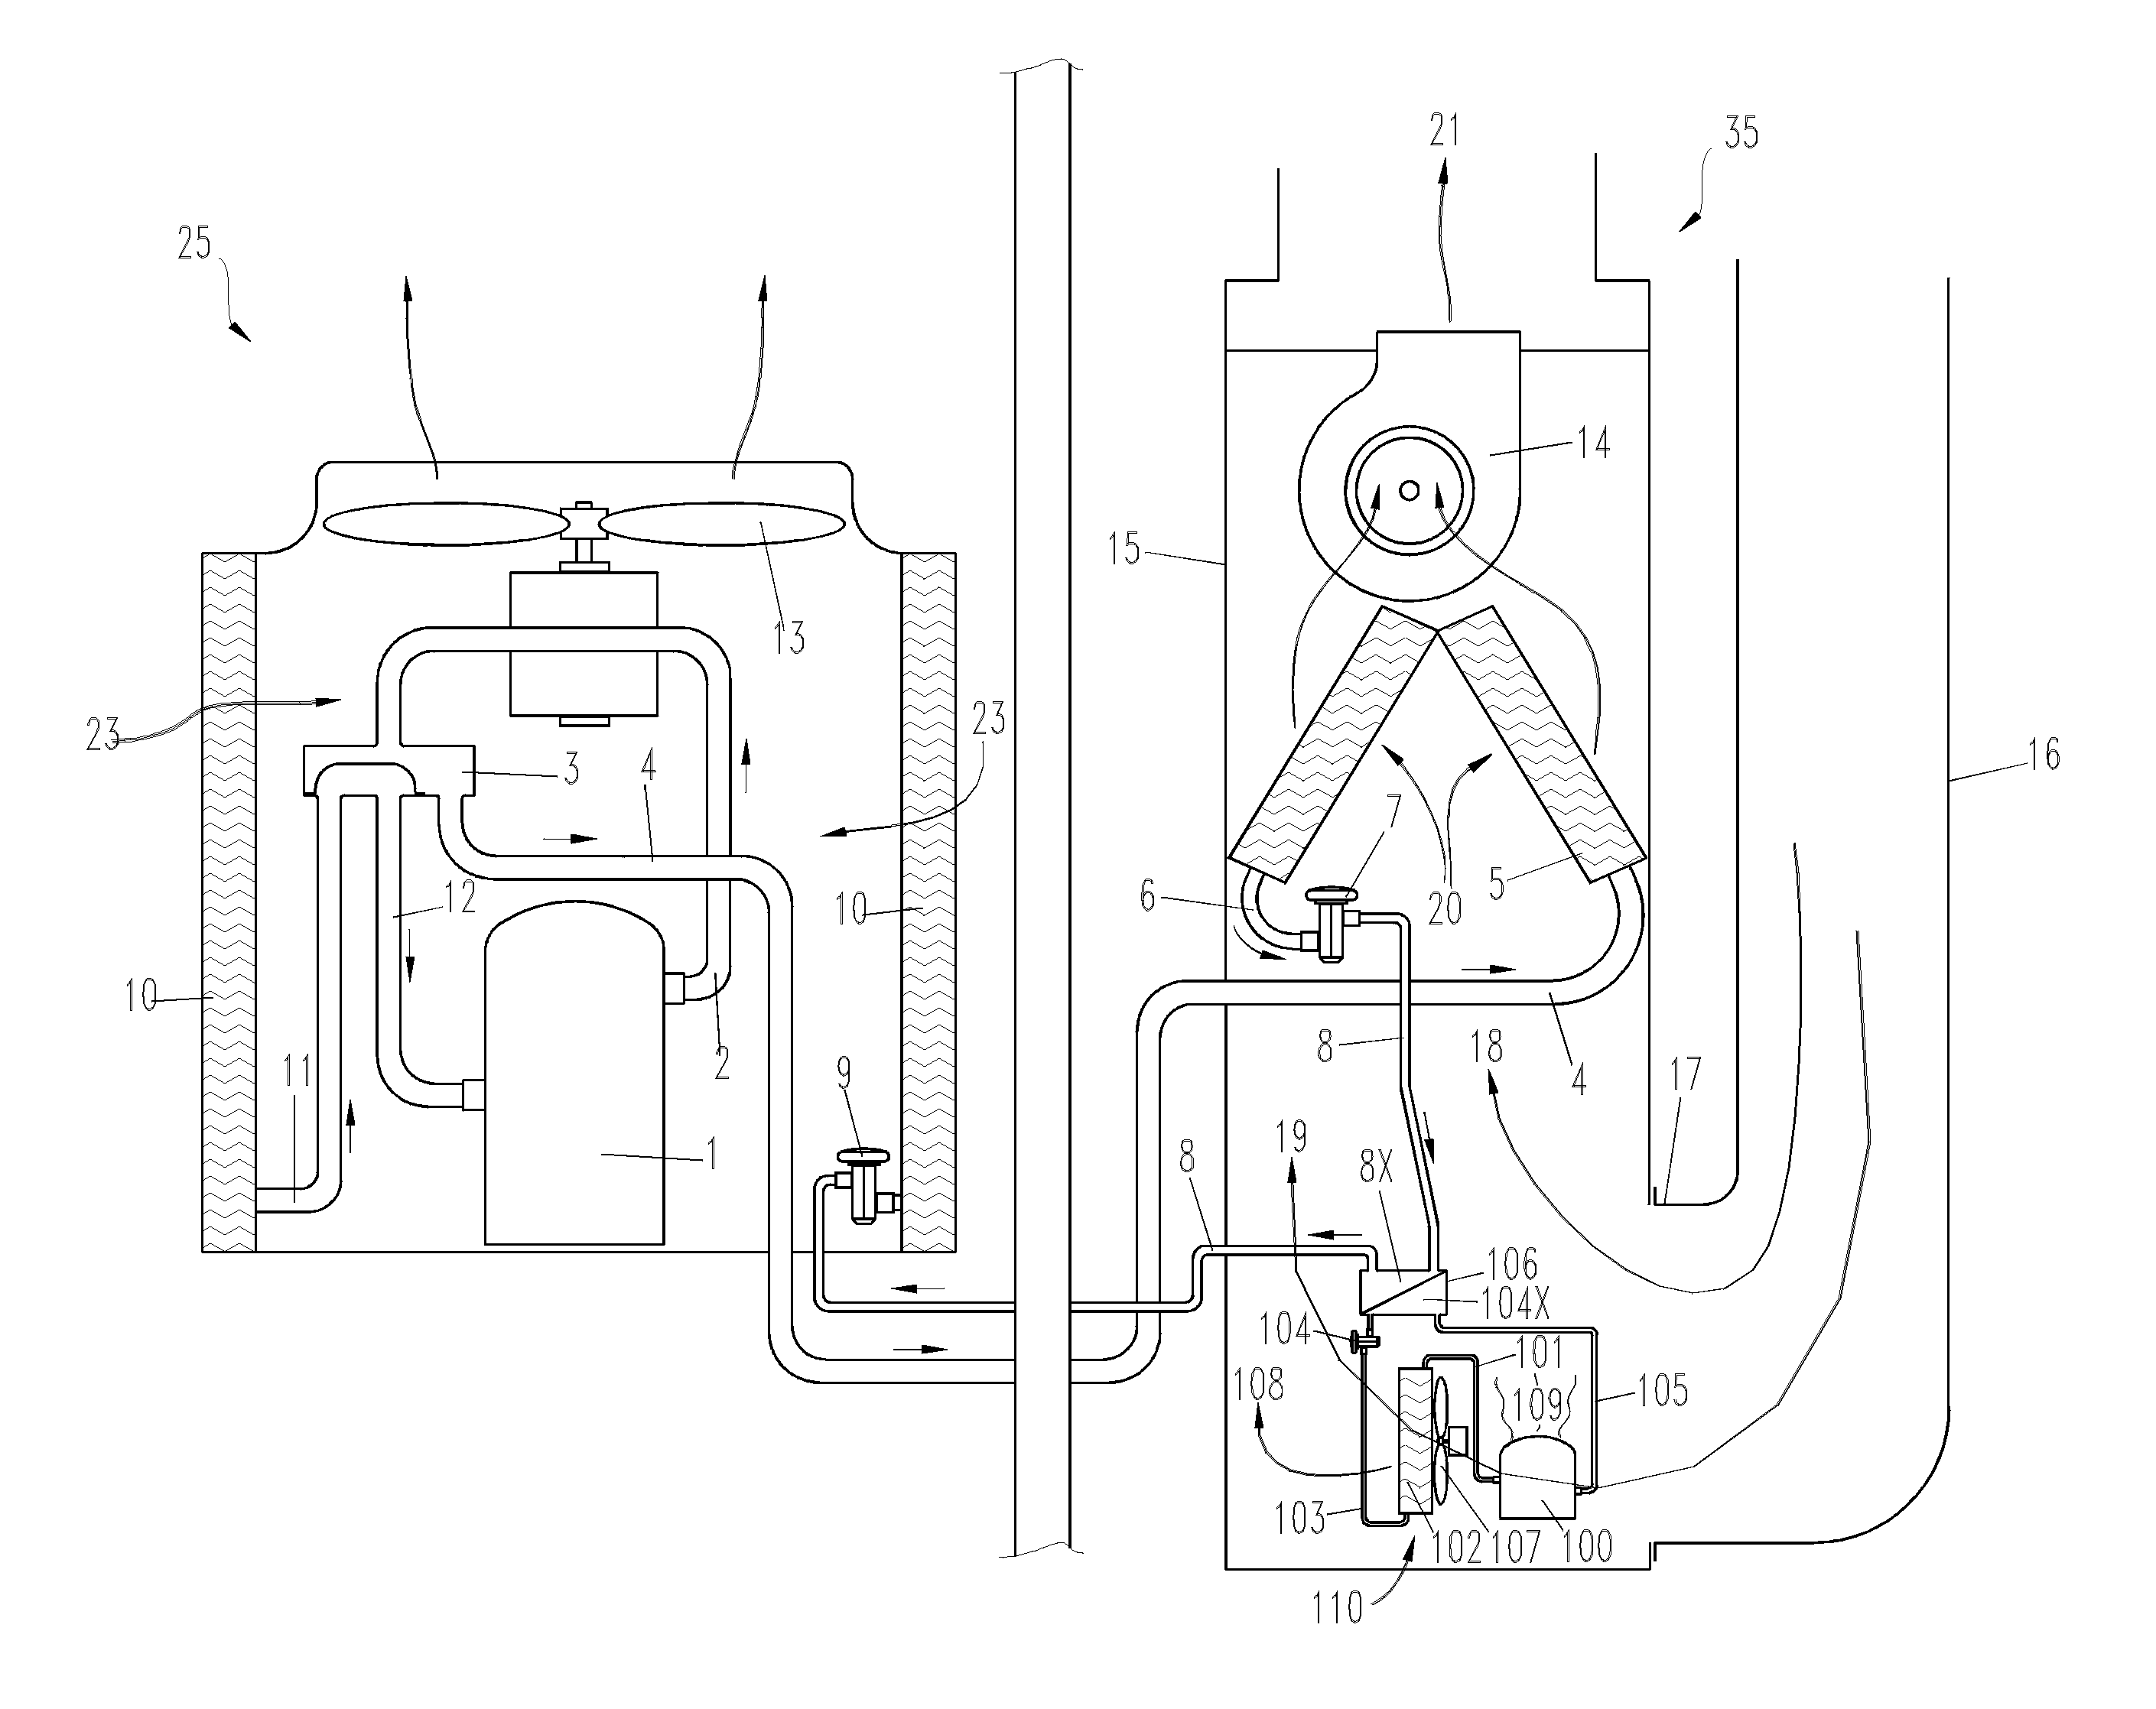 Heat pump with independent subcooler circuit